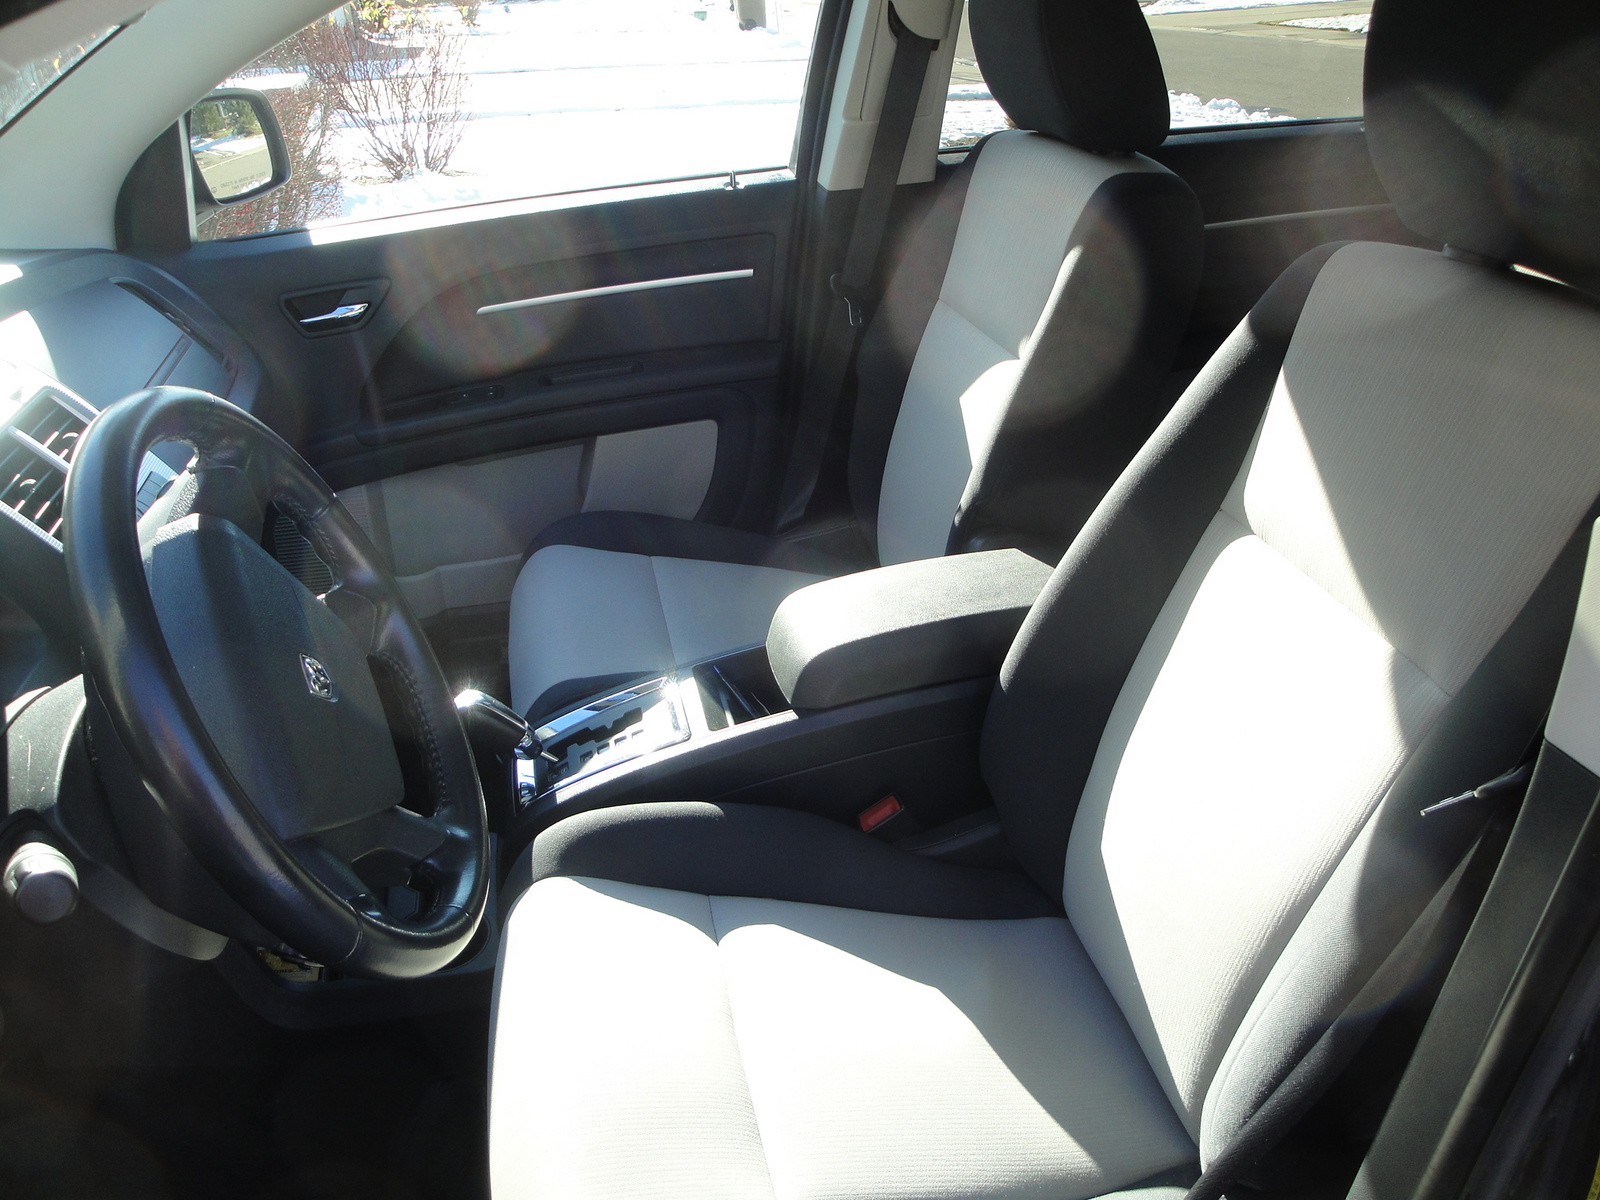 Picture of 2009 Dodge Journey SXT, interior